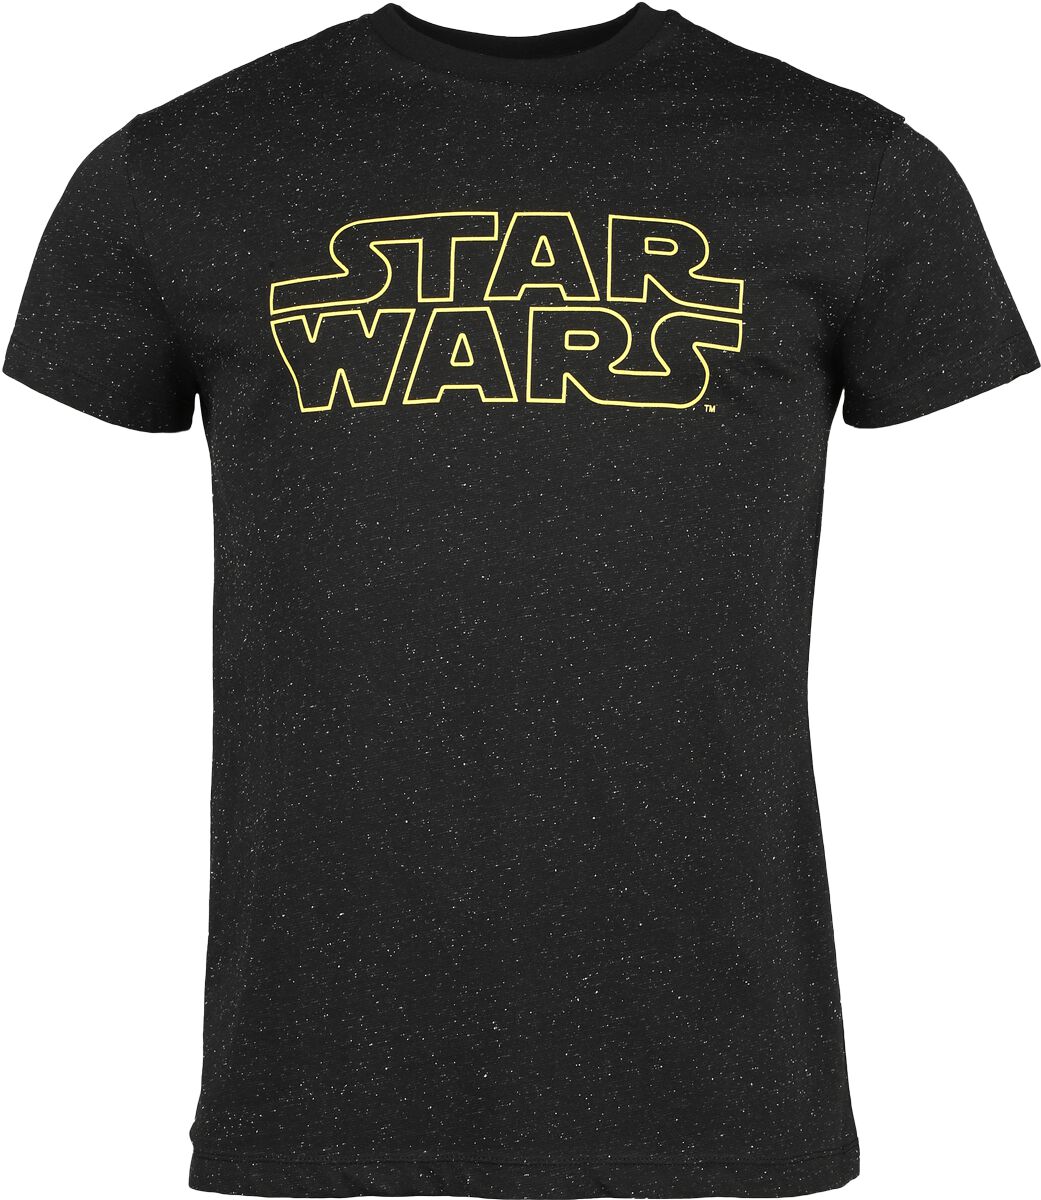 Star Wars Star Wars - Galaxy T-Shirt schwarz in XL